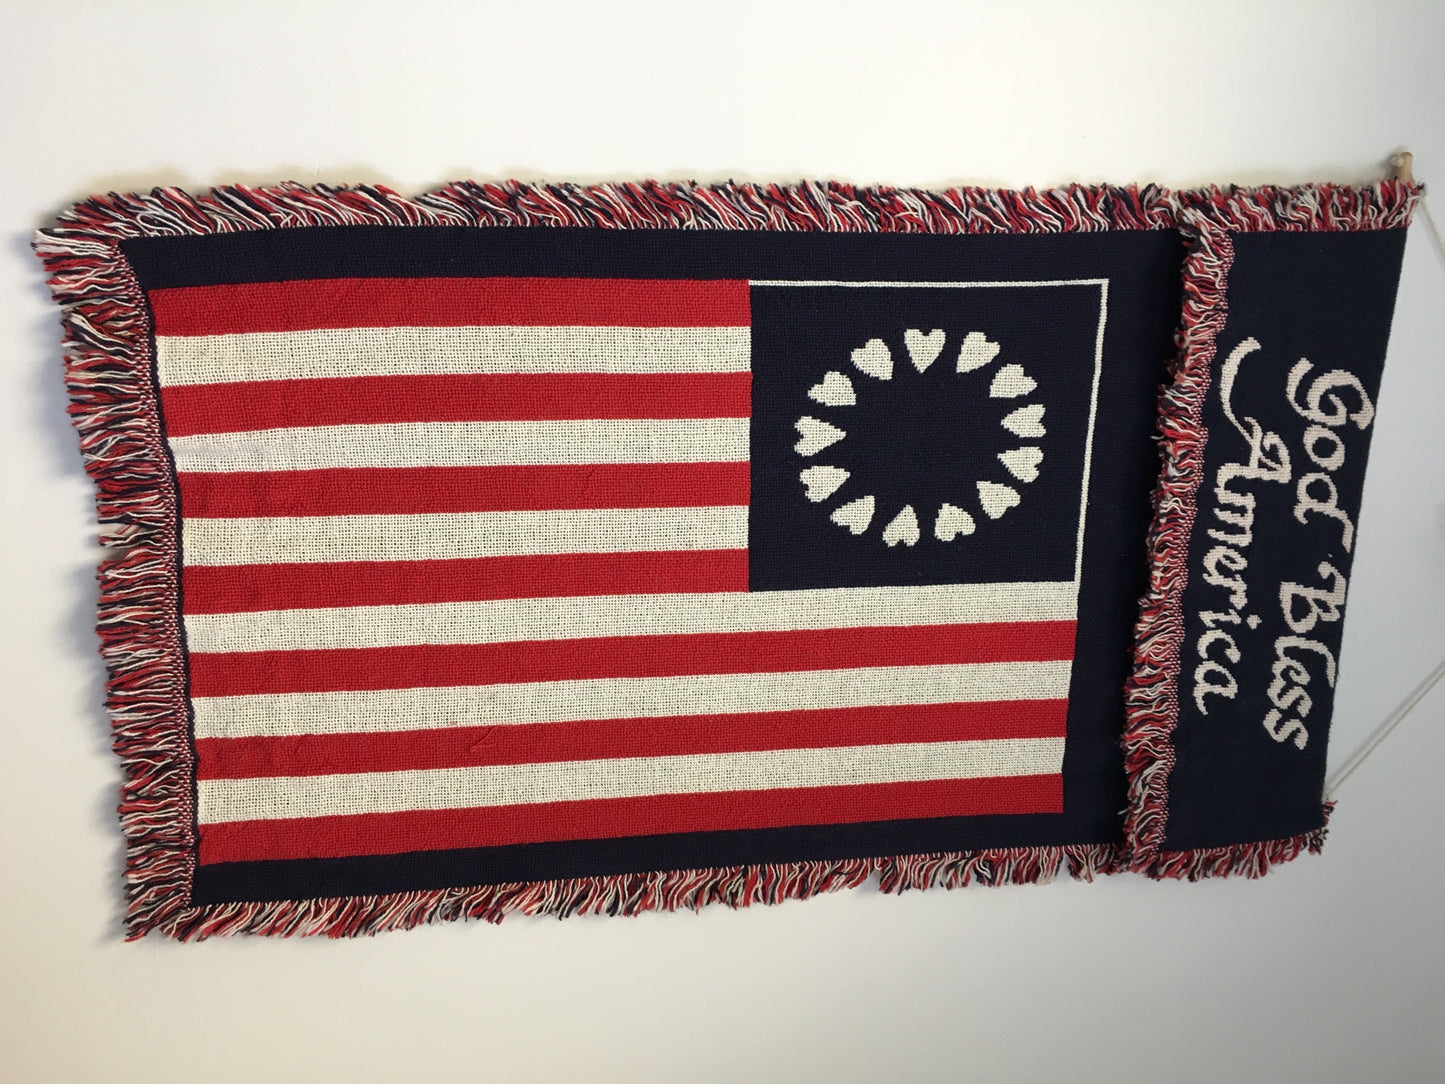 36" BETSY ROSS USA GOD BLESS AMERICA FLAG TAPESTRY wall hanging carpet rug